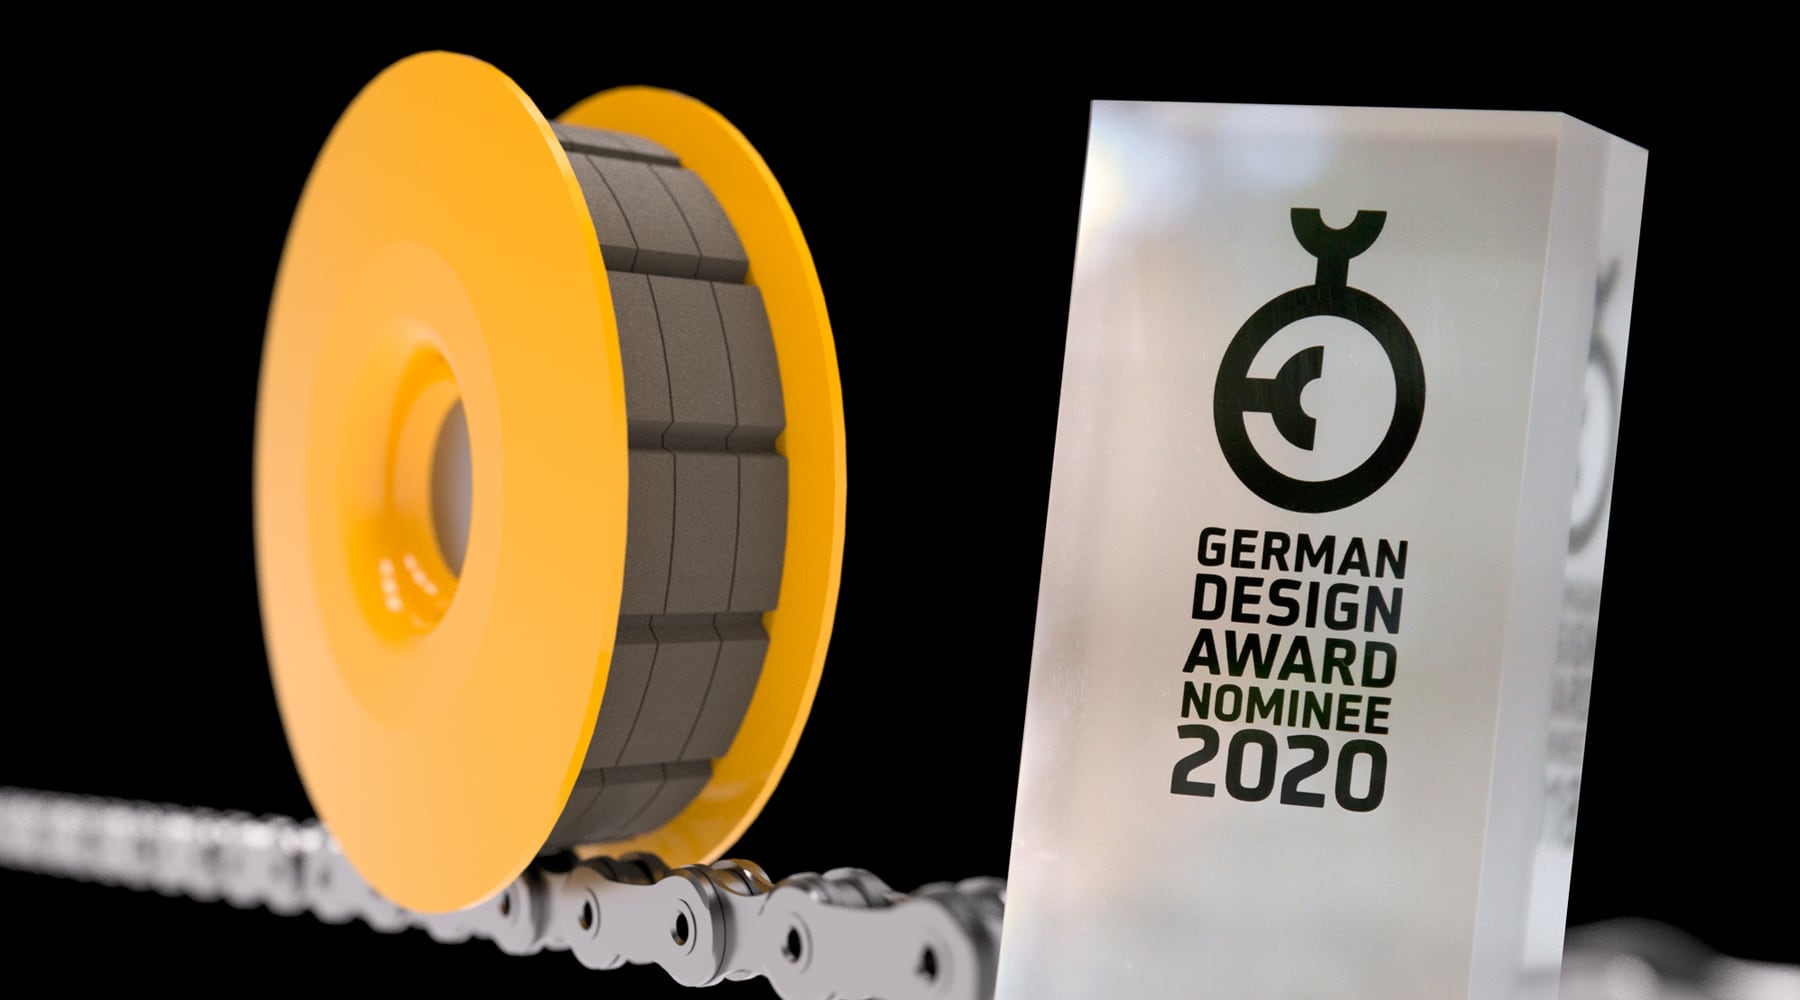 FLECTR LUBRI DISC - German Design Award 2020 nominee for Excellent Product Design